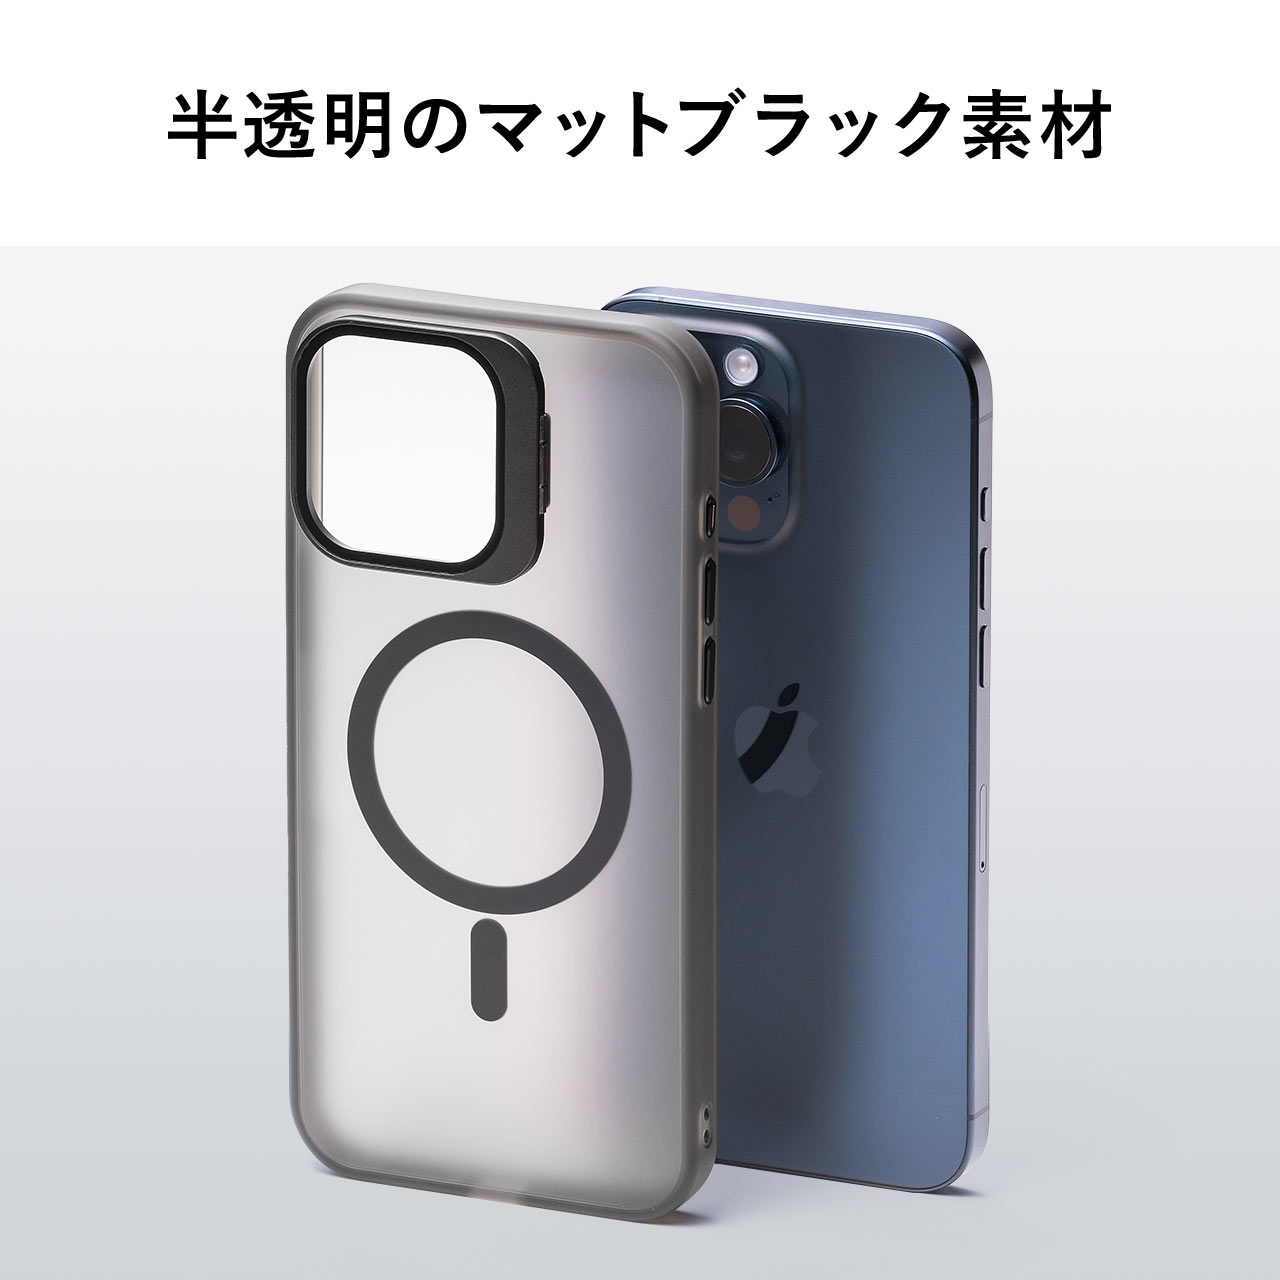 iPhone15 専用ソフトケース マットブラック 半透明 カメラカバー